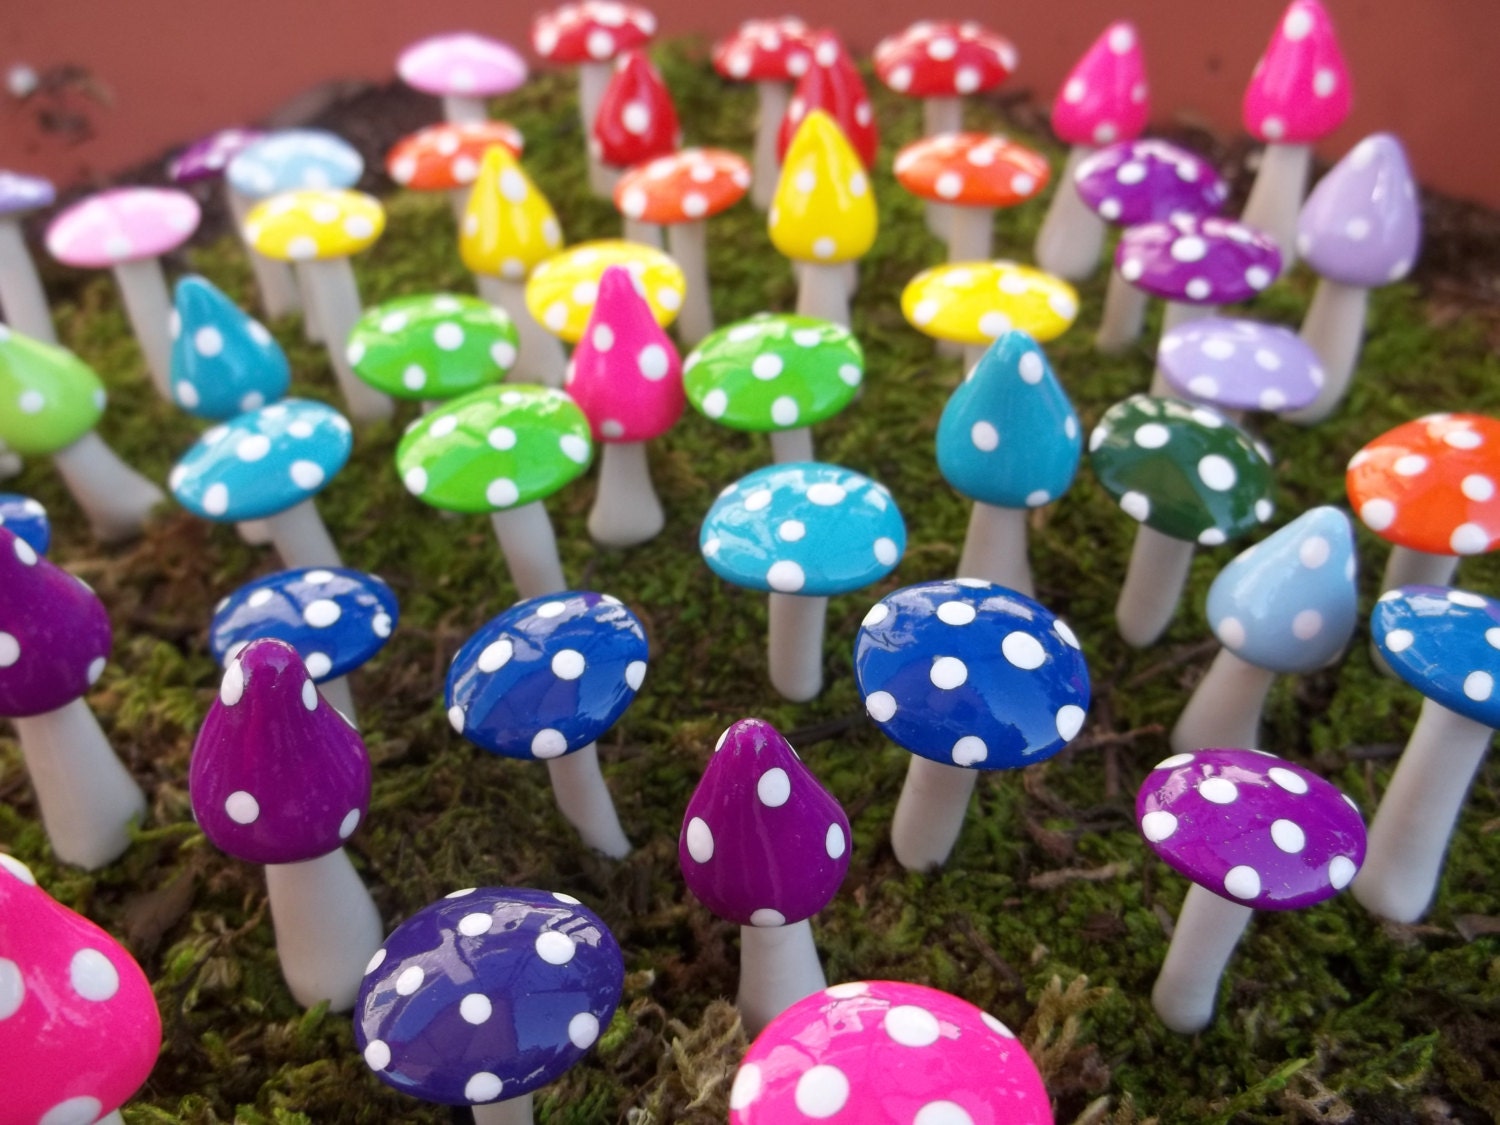 wholesale lot 100 miniature fairy garden accessories mushrooms toadstools U-pick 